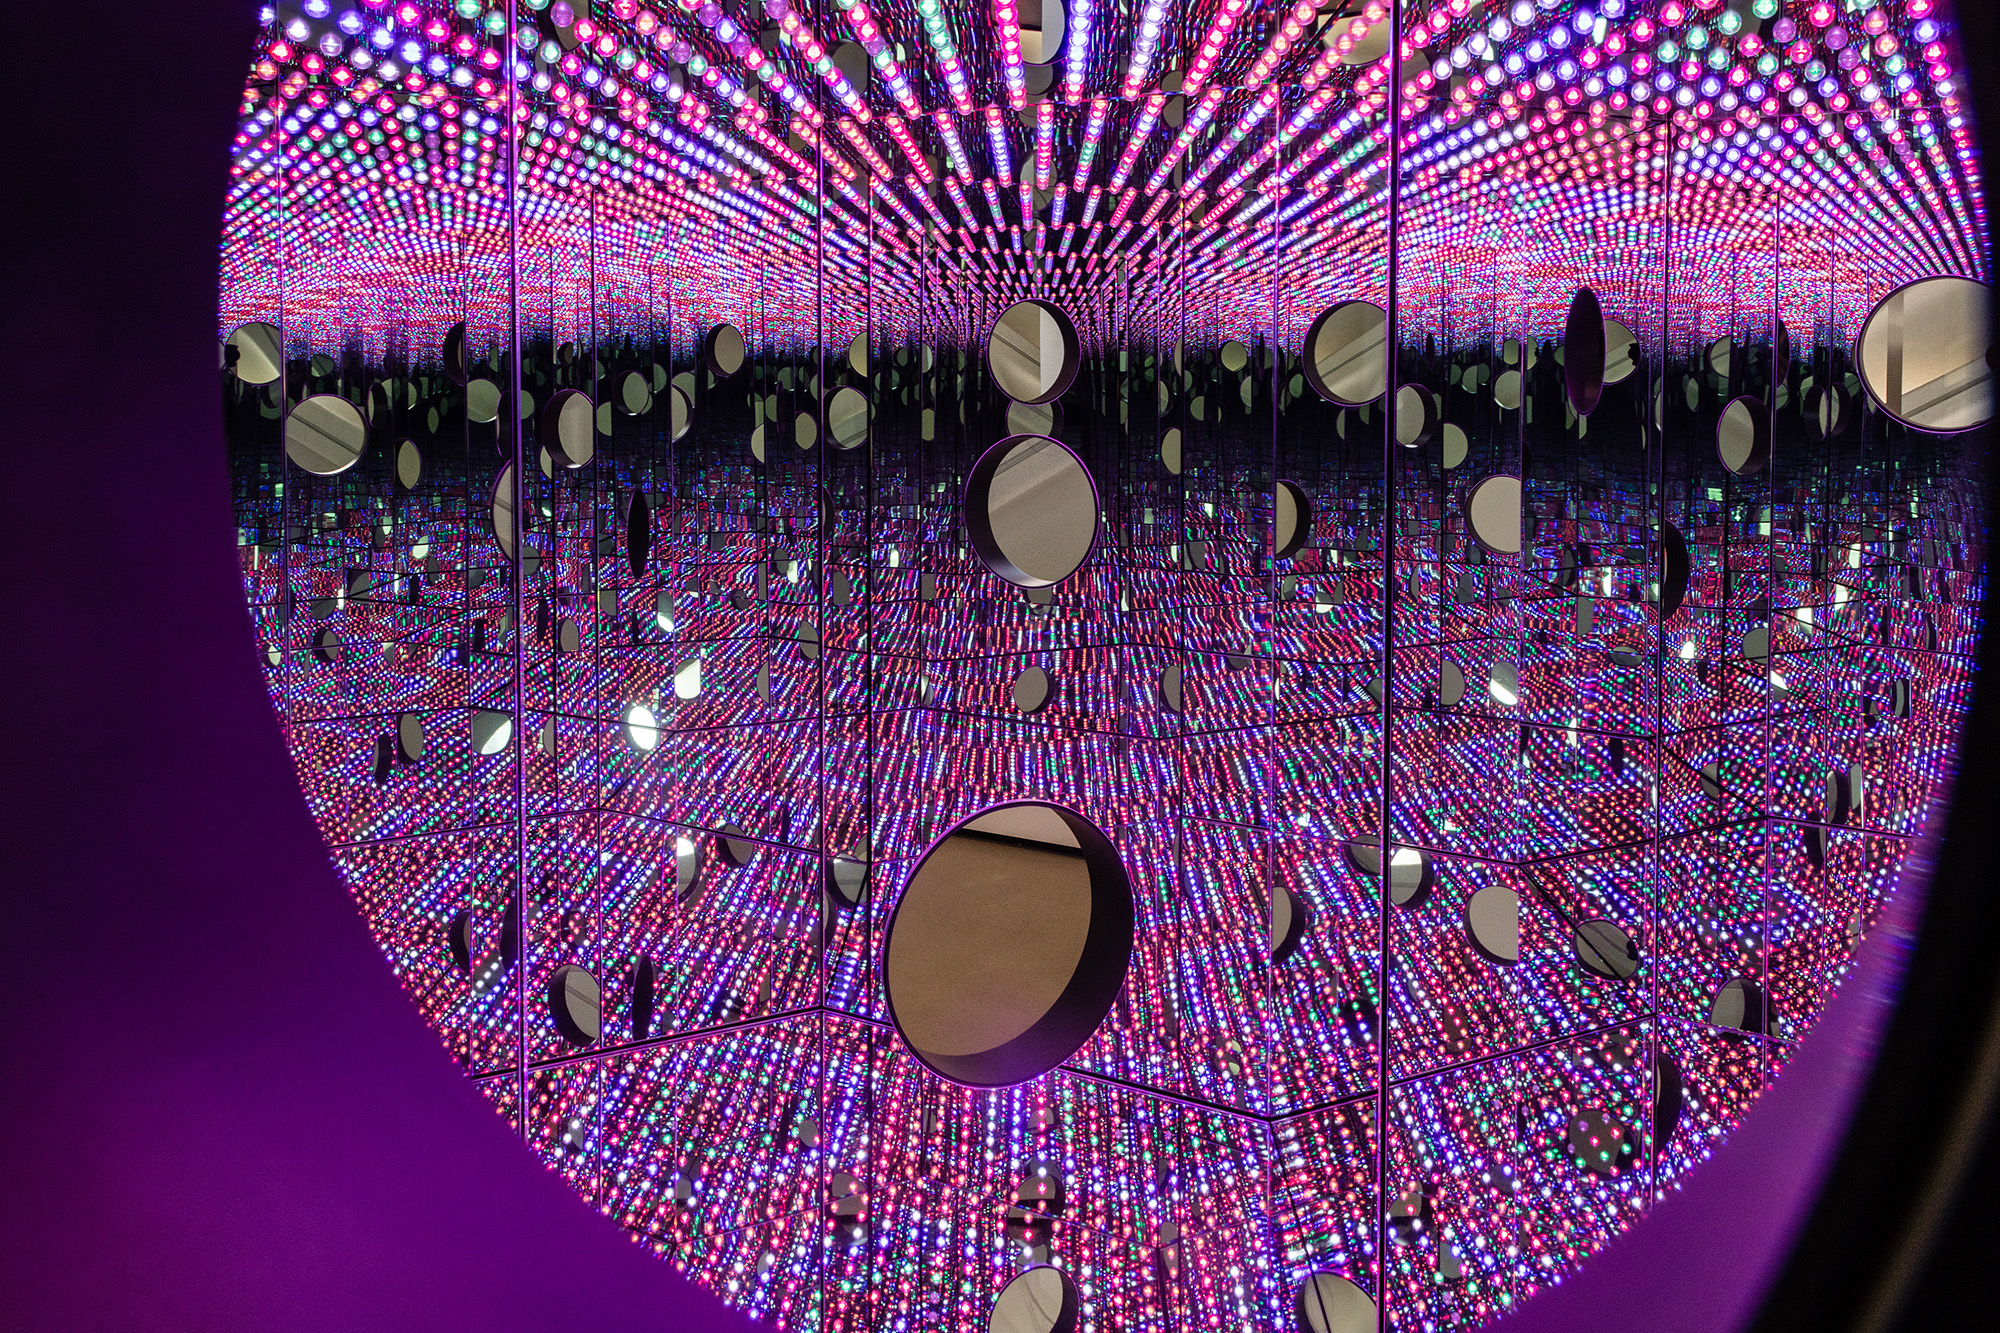 Yayoi Kusama - Longing for Eternity, 2017, mirrored box and LED lights